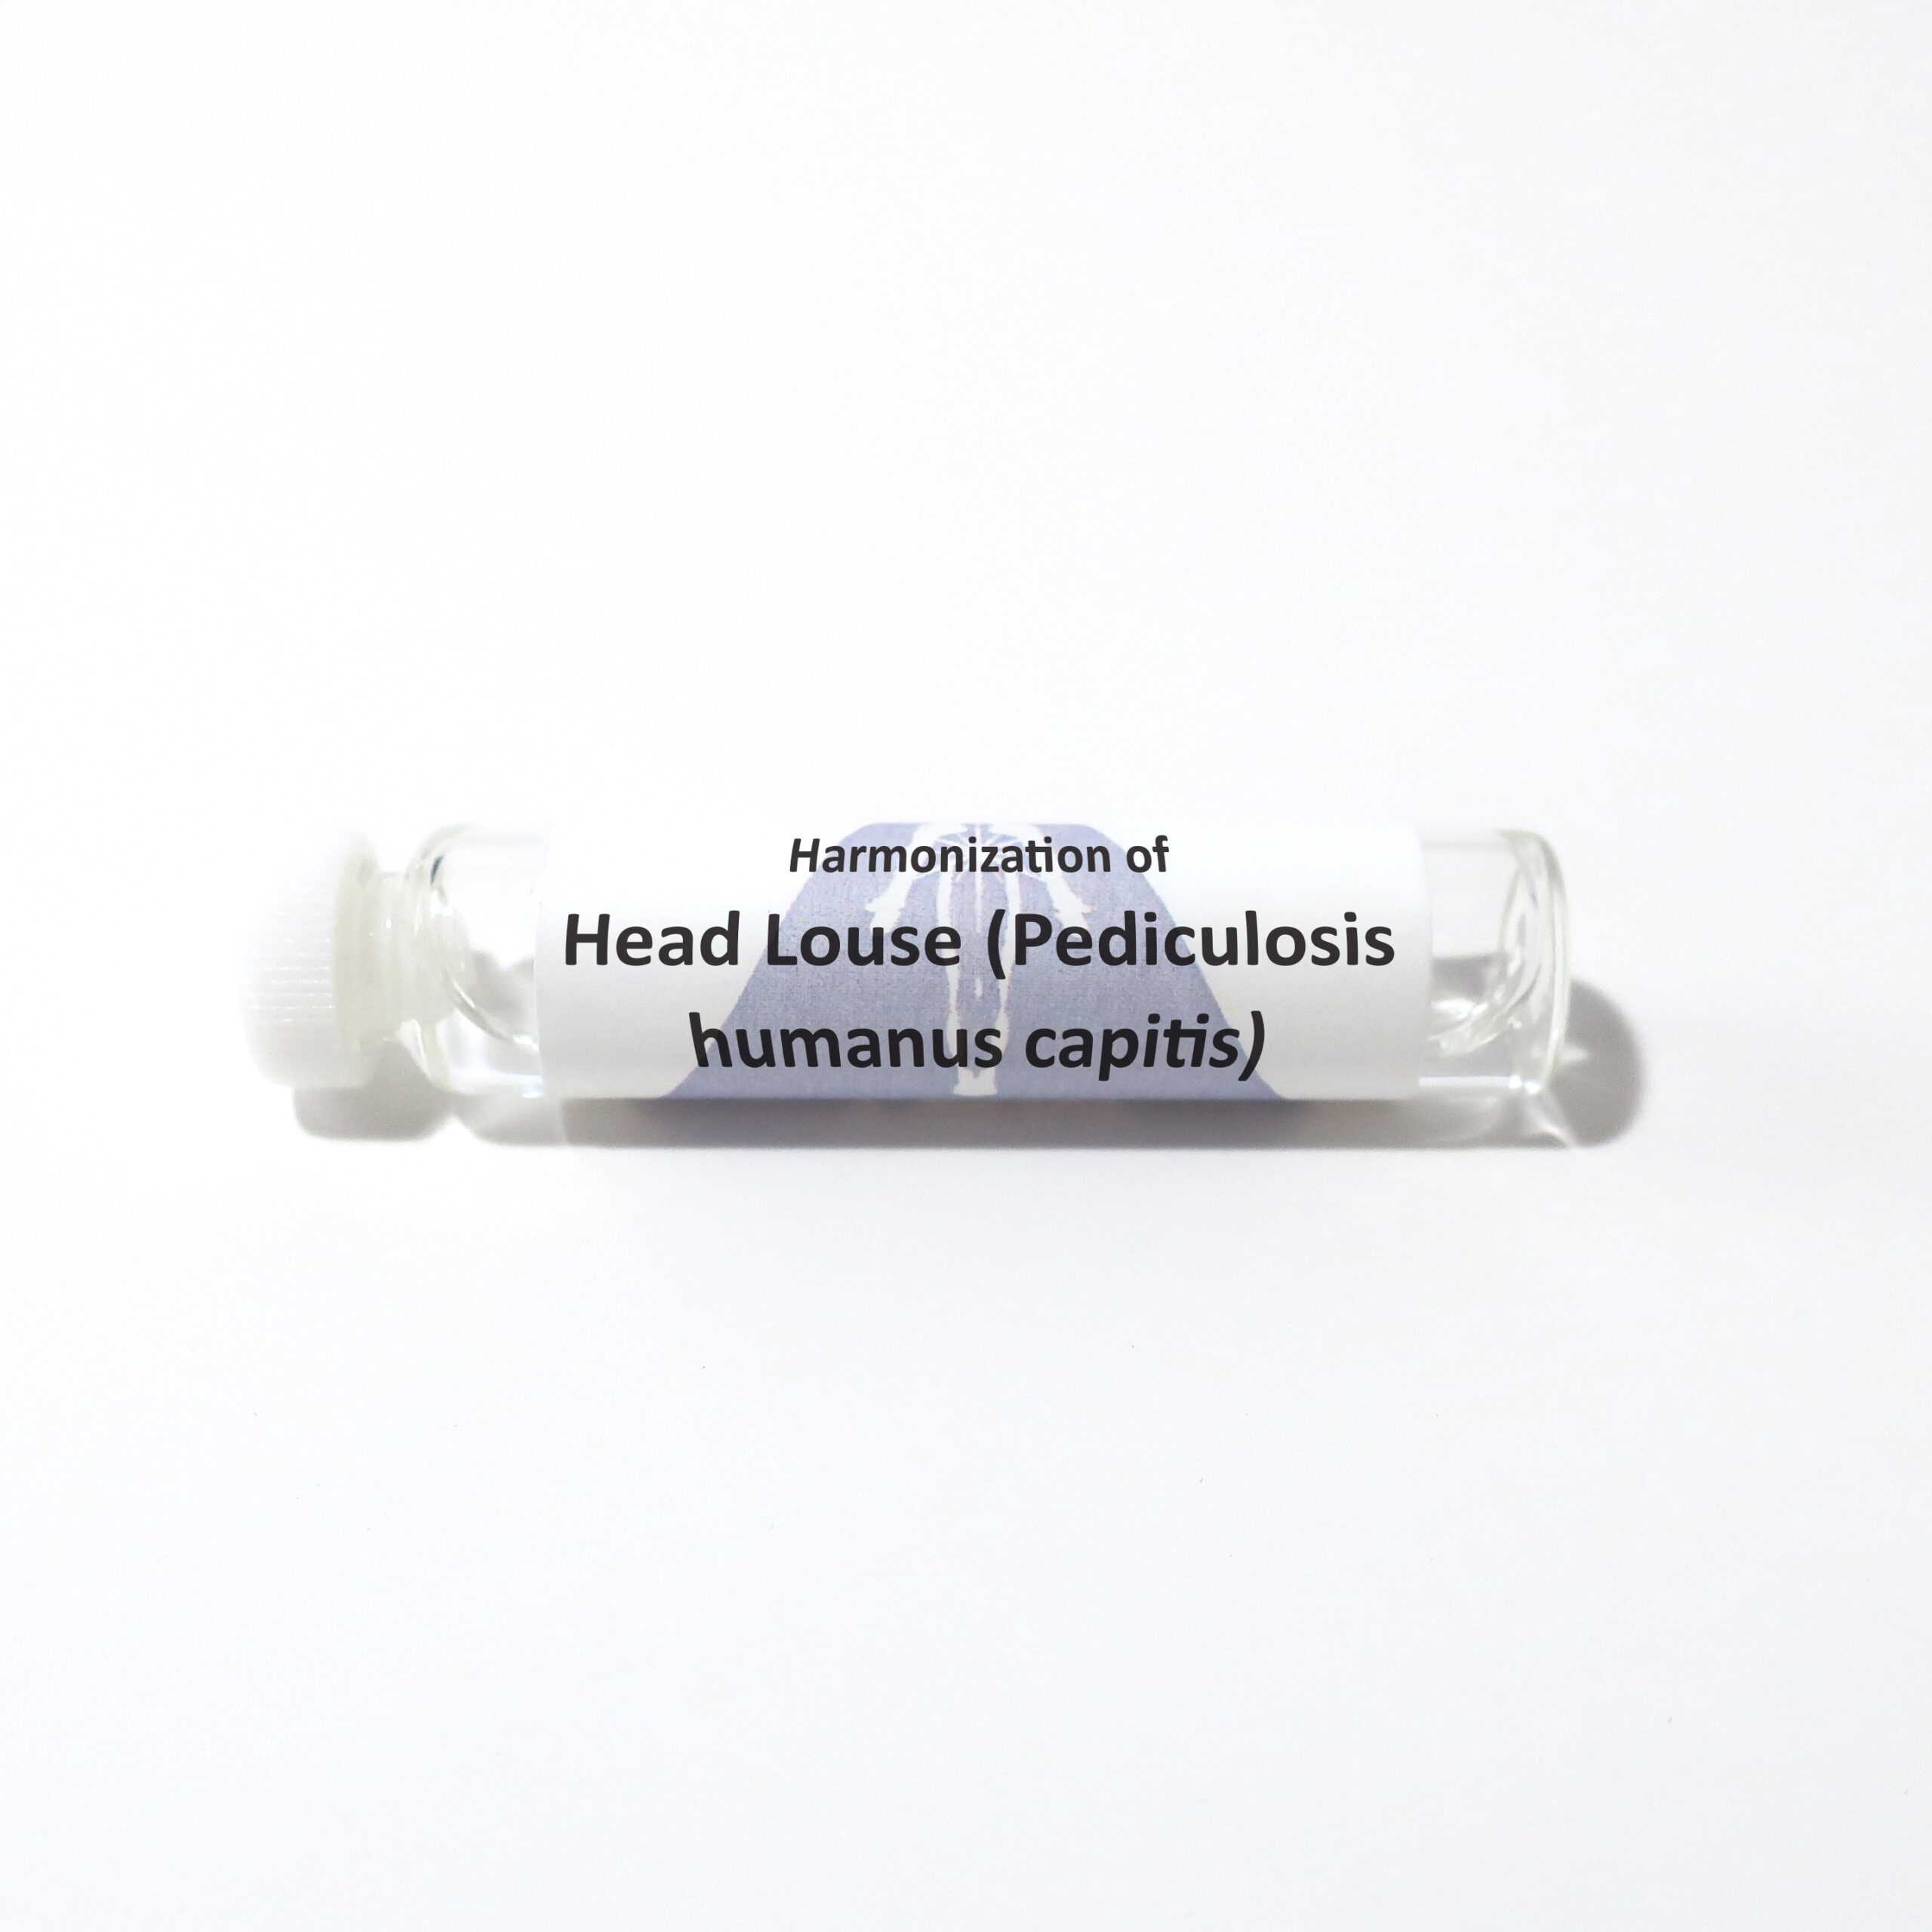 Head Louse (Pediculosis humanus capitis)